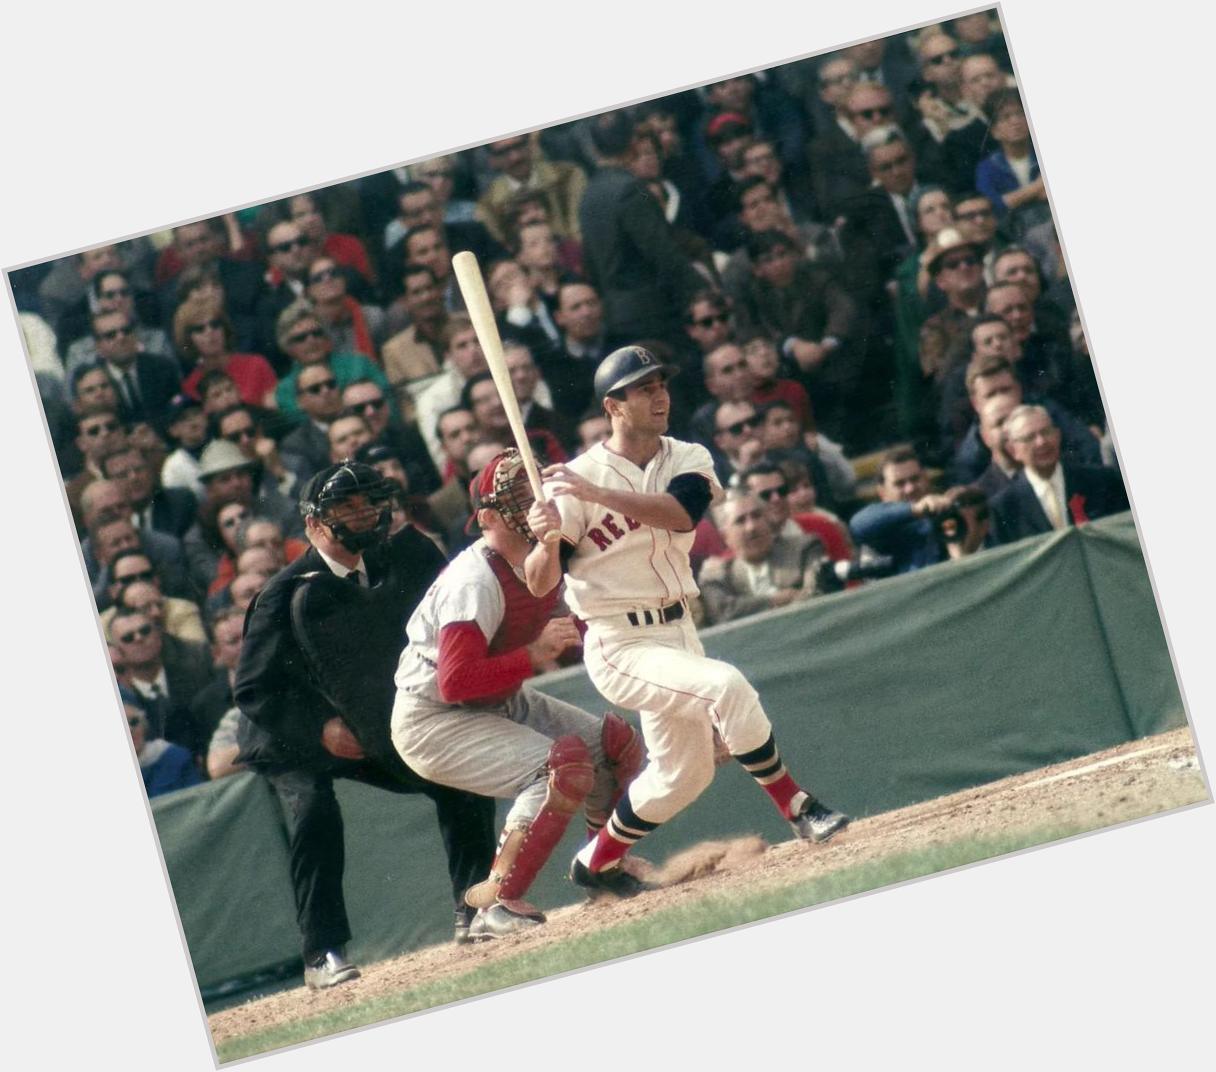 Happy 76th birthday to Boston Red Sox great Carl Yastrzemski, an 18-time All Star. 